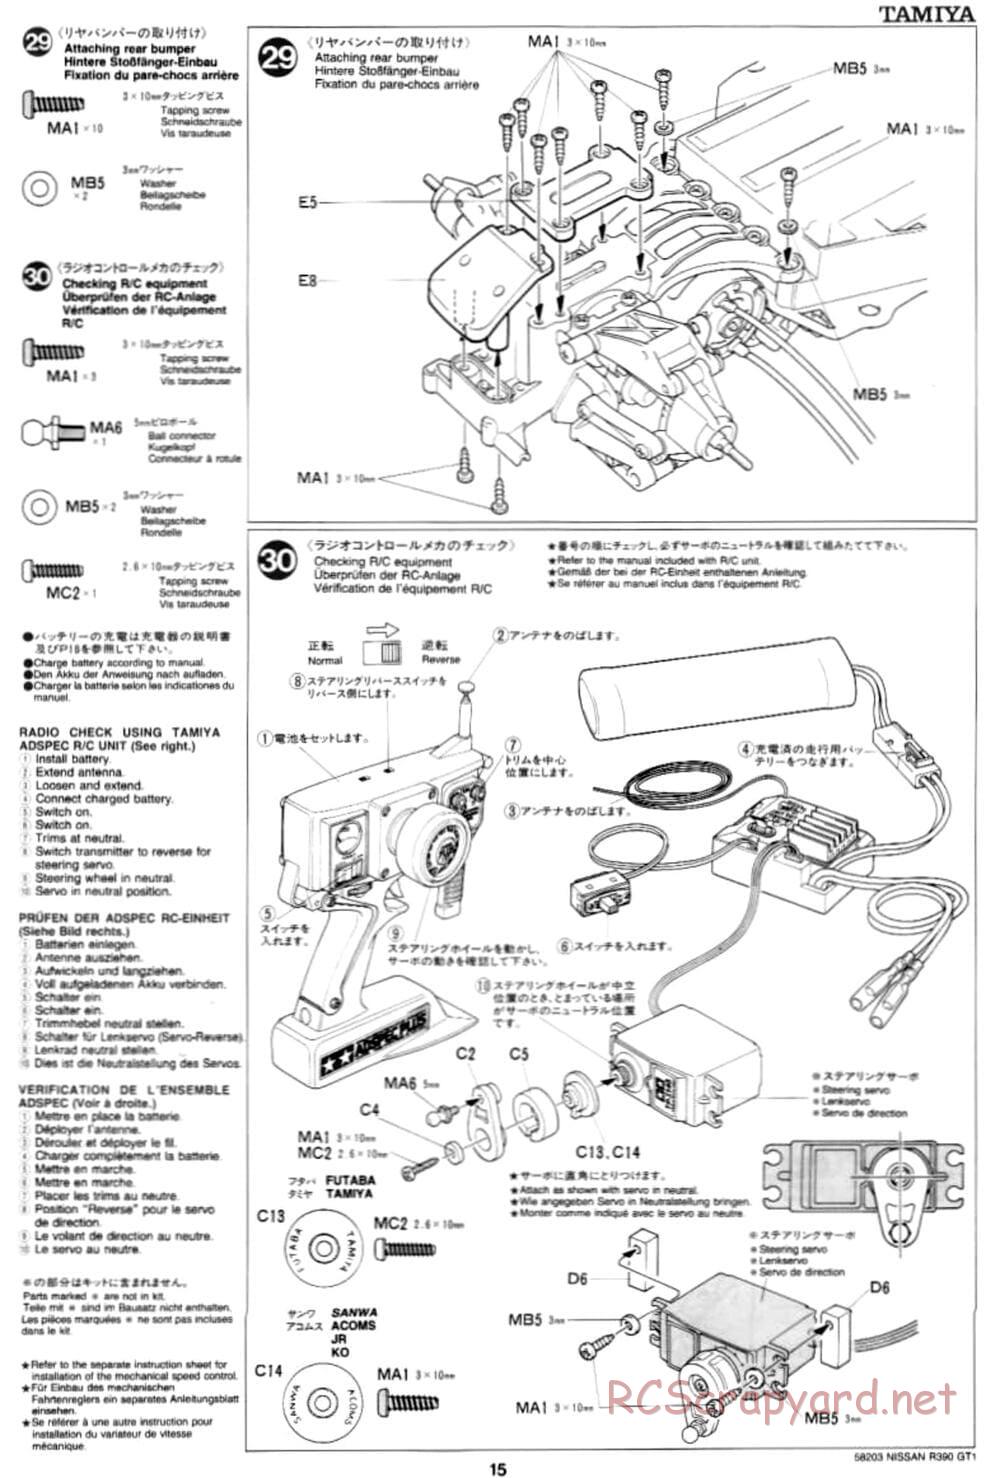 Tamiya - Nissan R390 GT1 - TA-03R Chassis - Manual - Page 15